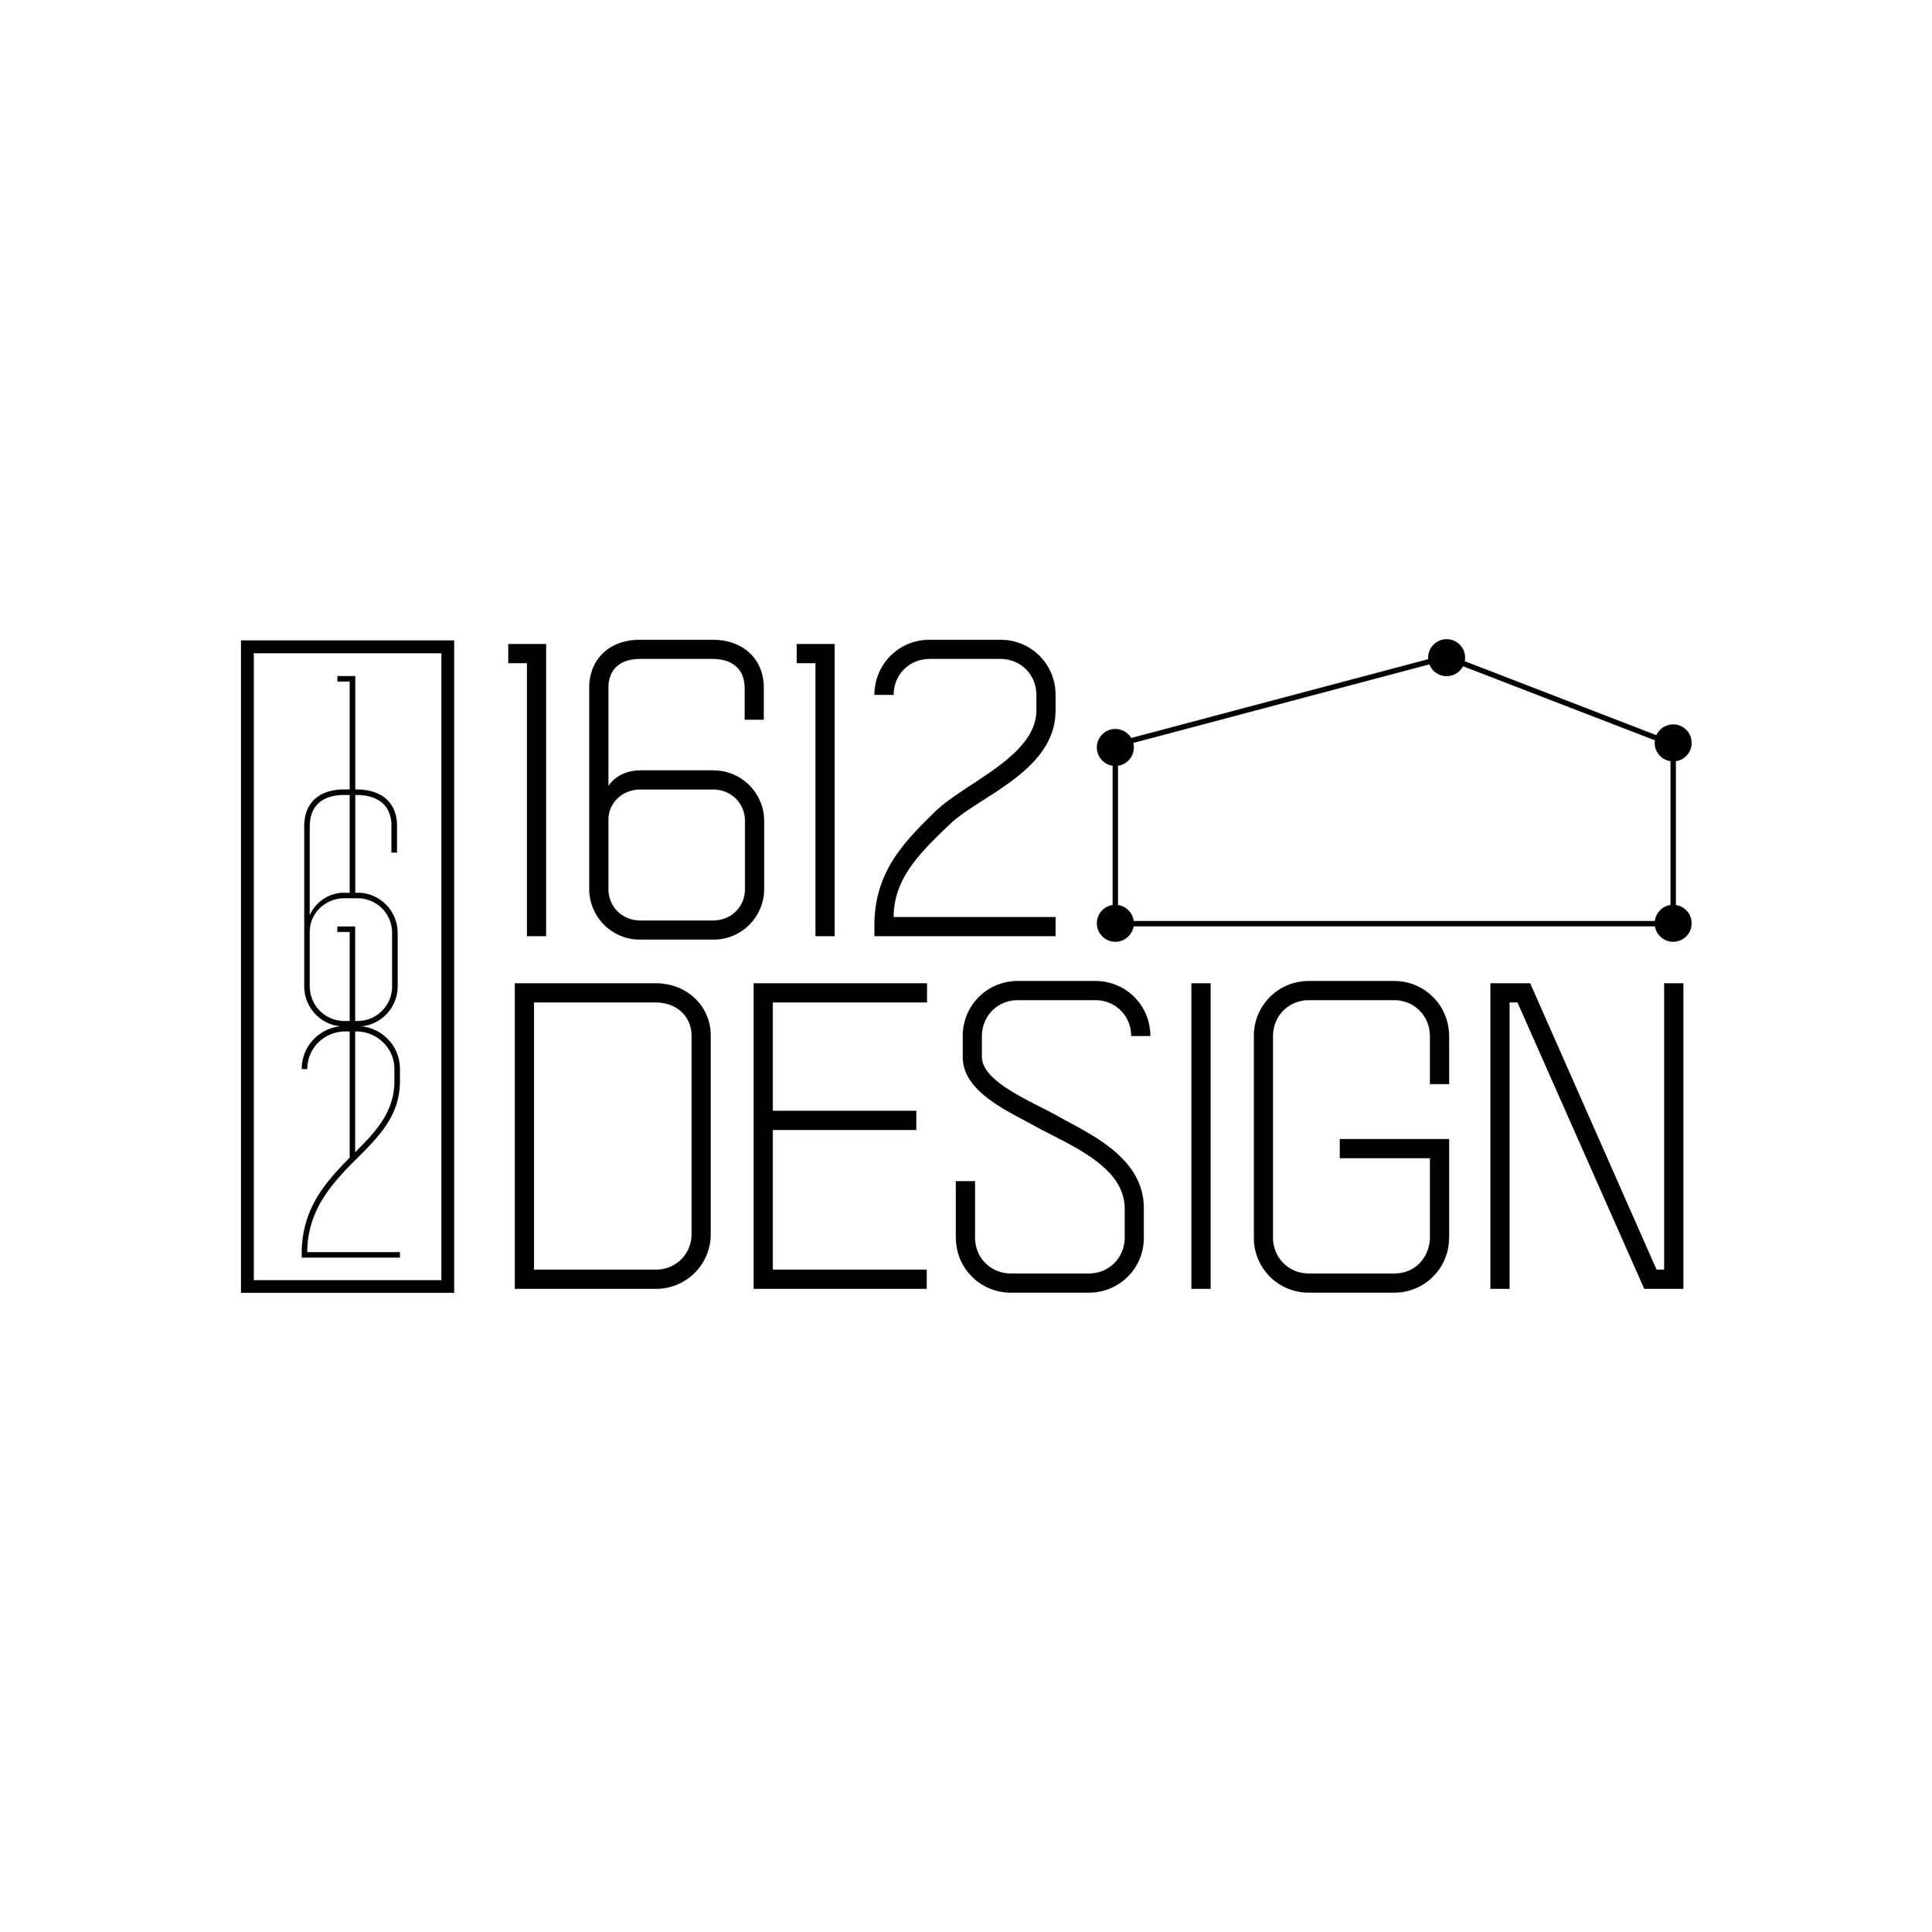 1612 design logo FINAL 2 square black.jpg